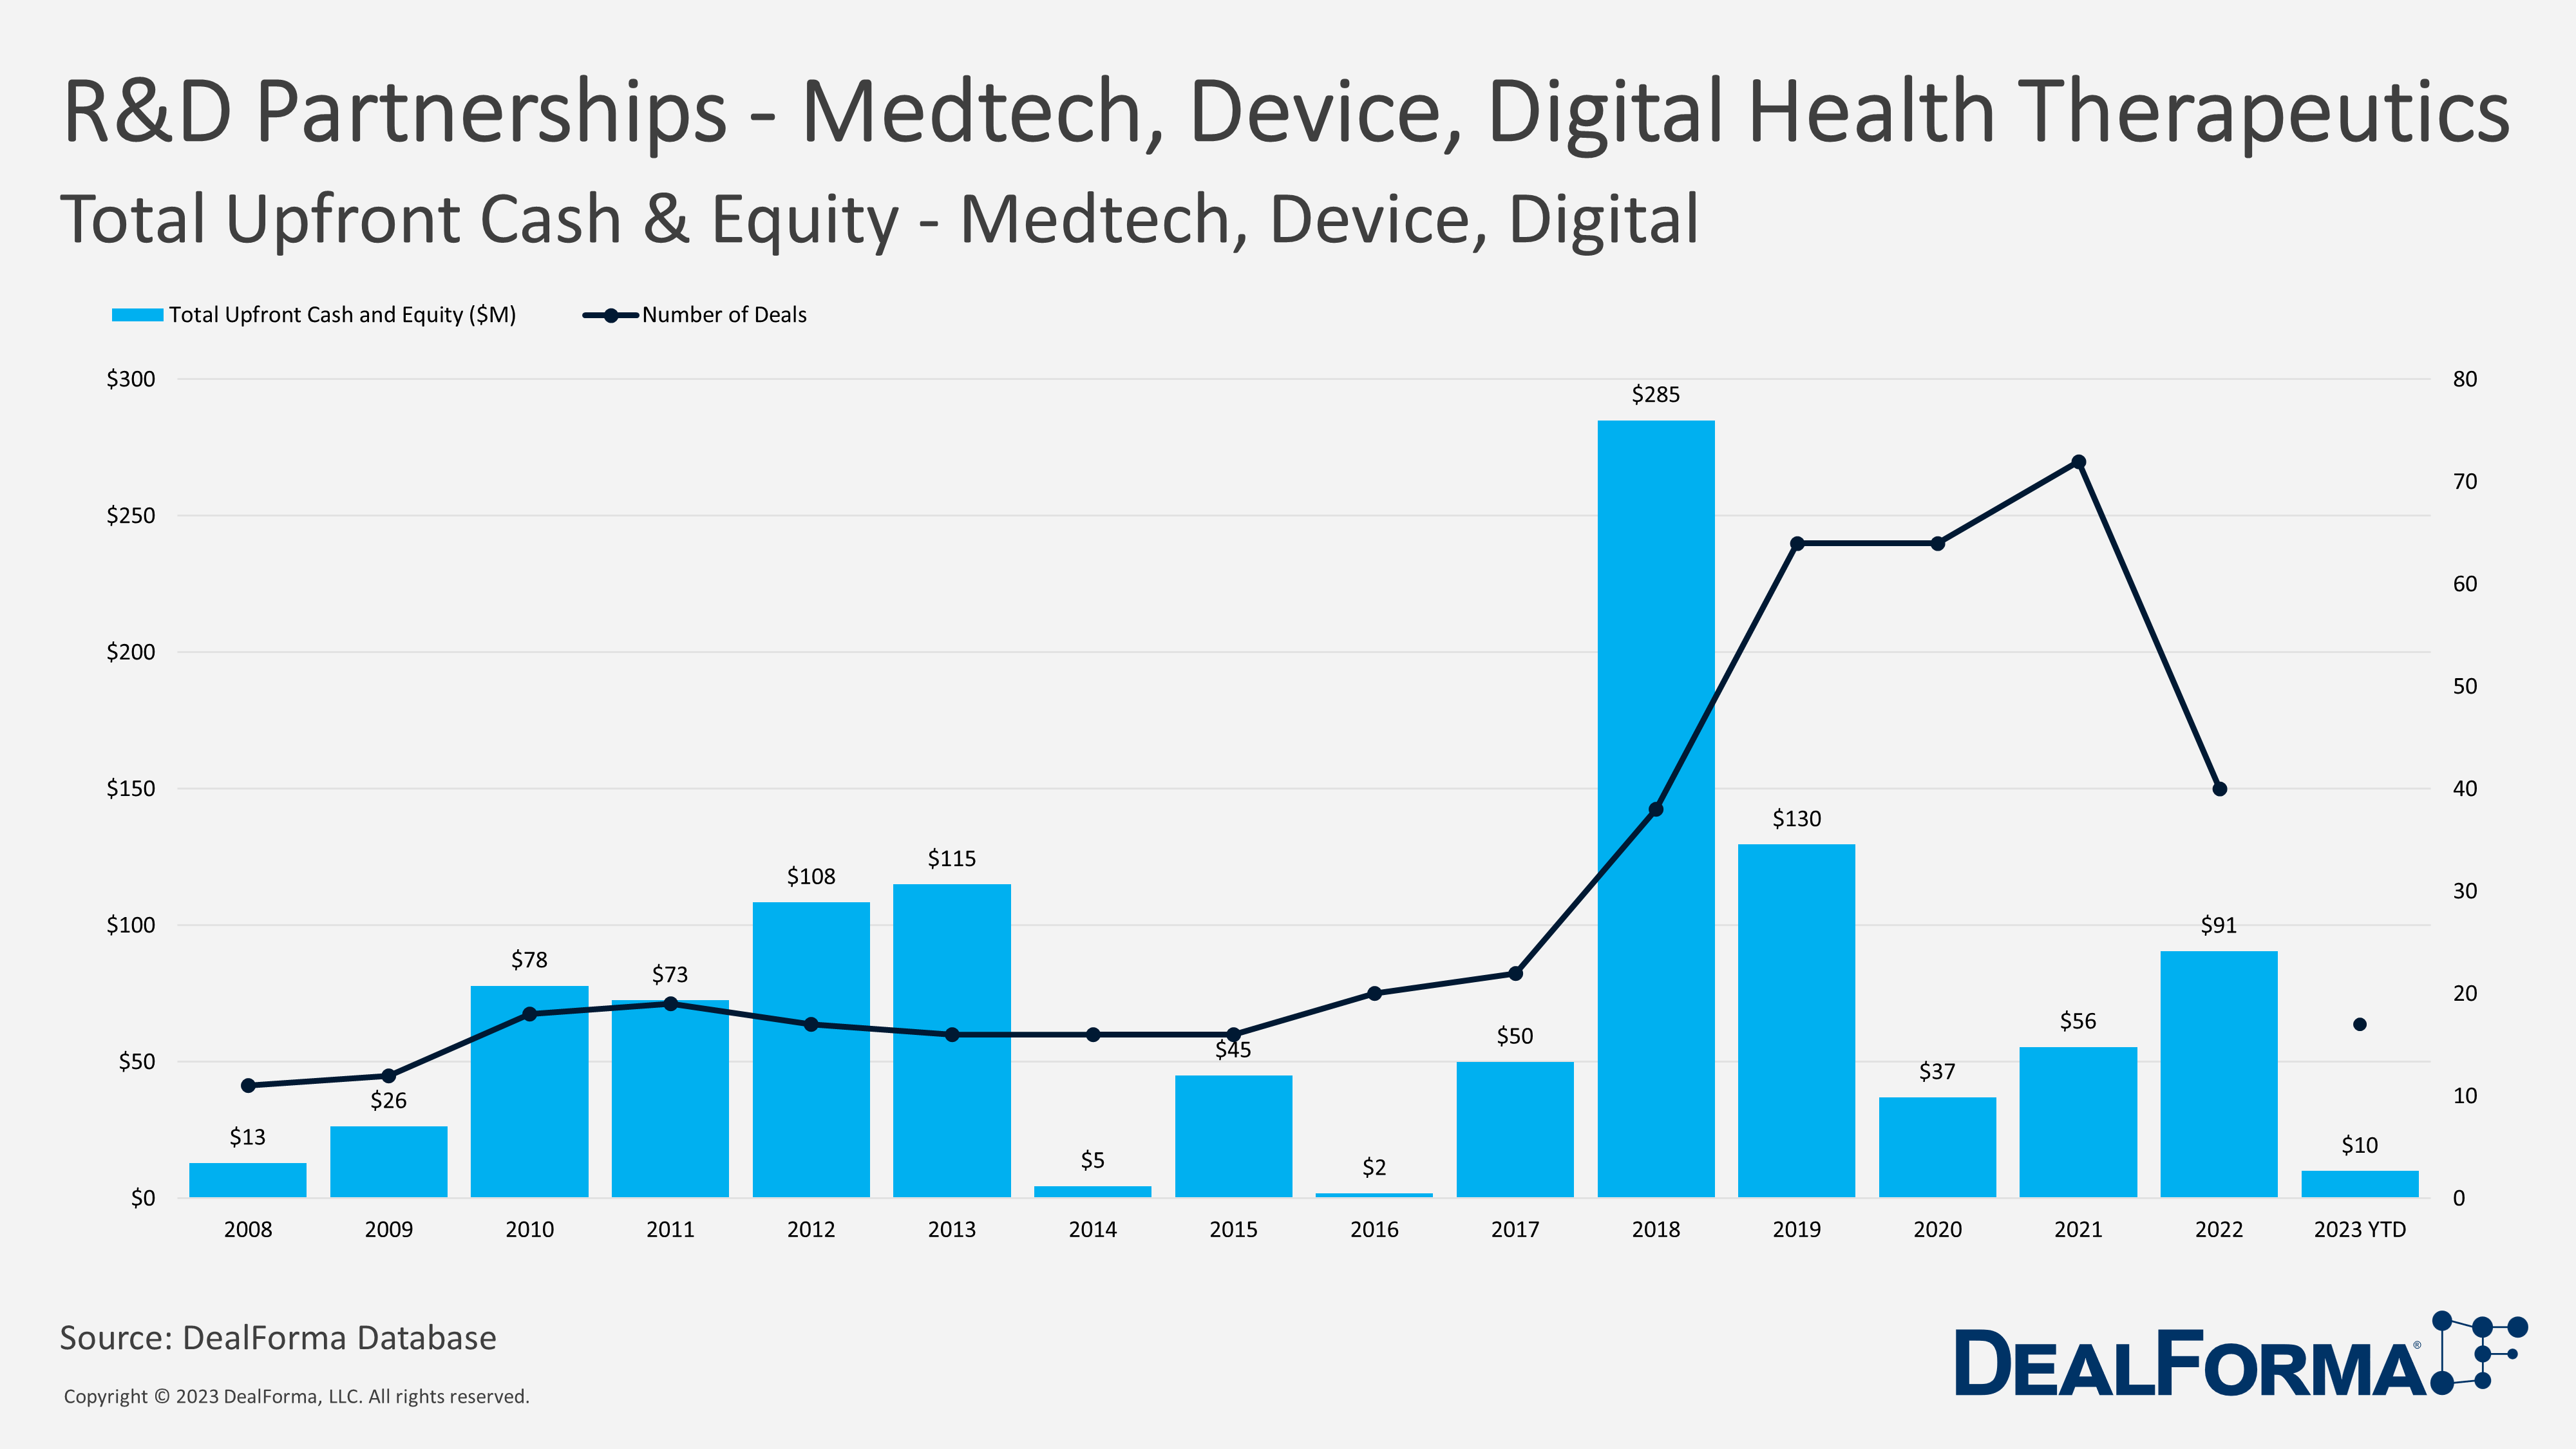 R&D Partnerships - Medtech, Device, Digital etc. Total upfront cash & equity - Medtech, device digital